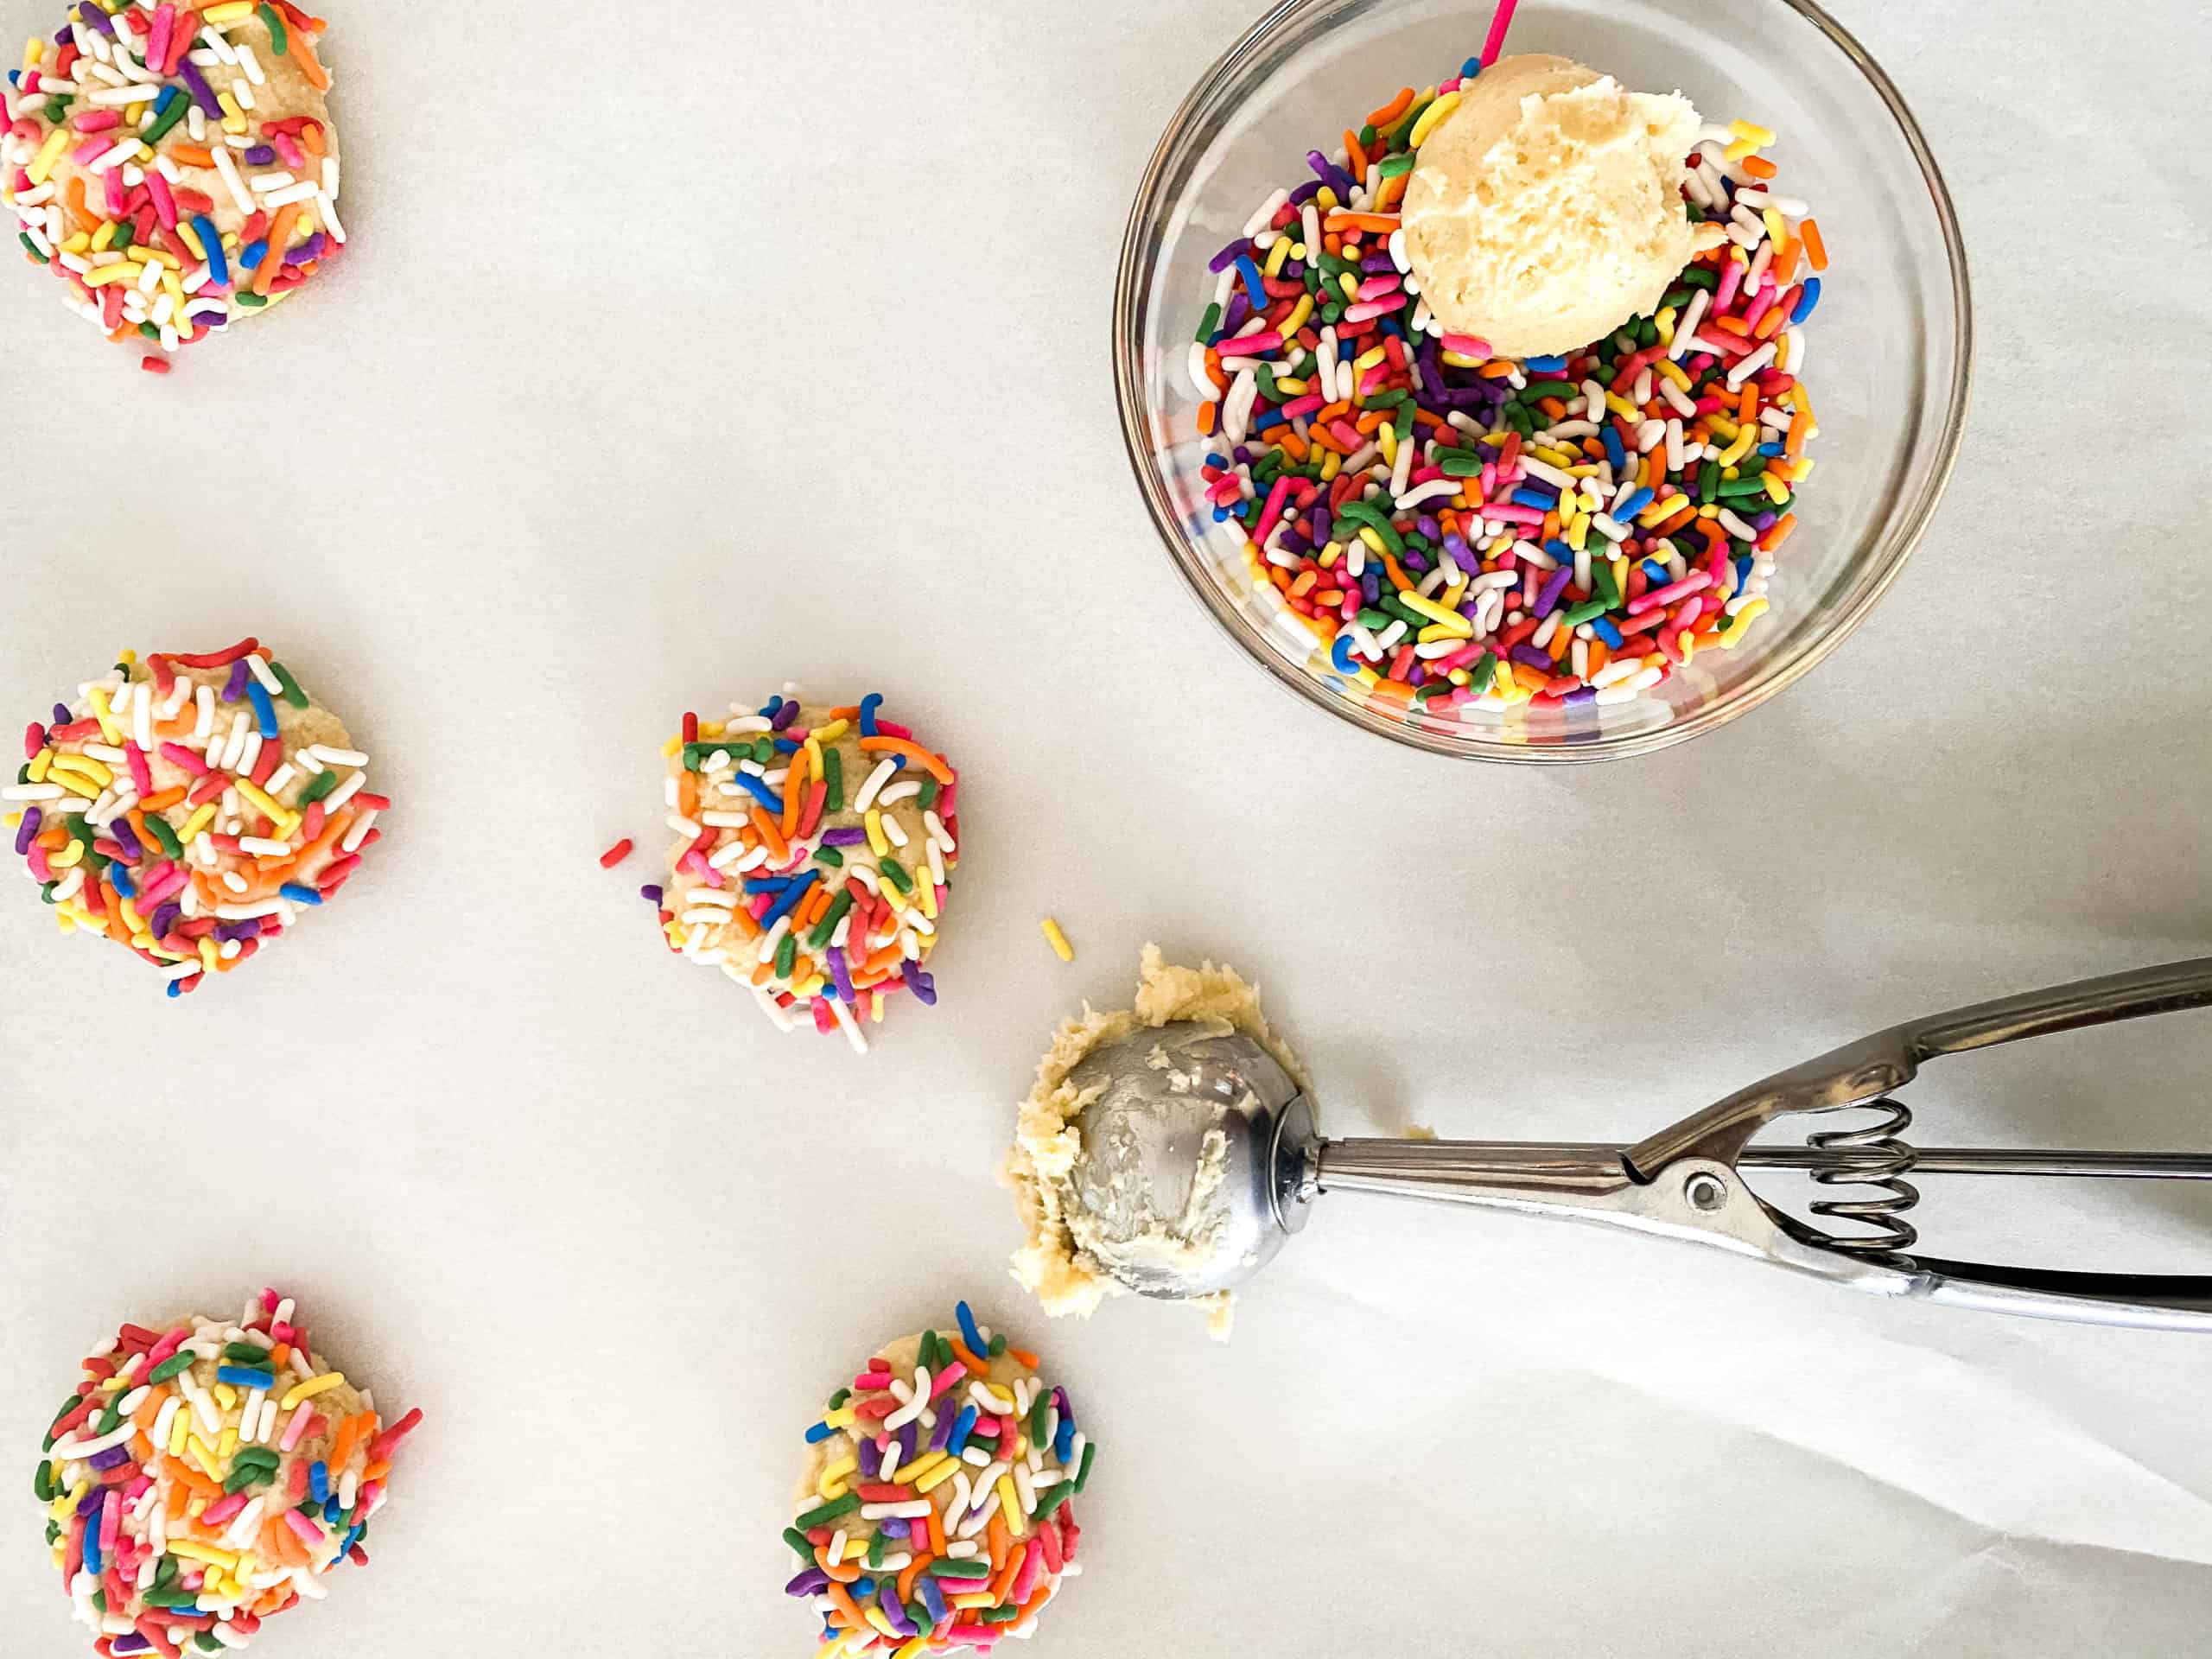 Drop the cookie dough in sprinkles before baking,